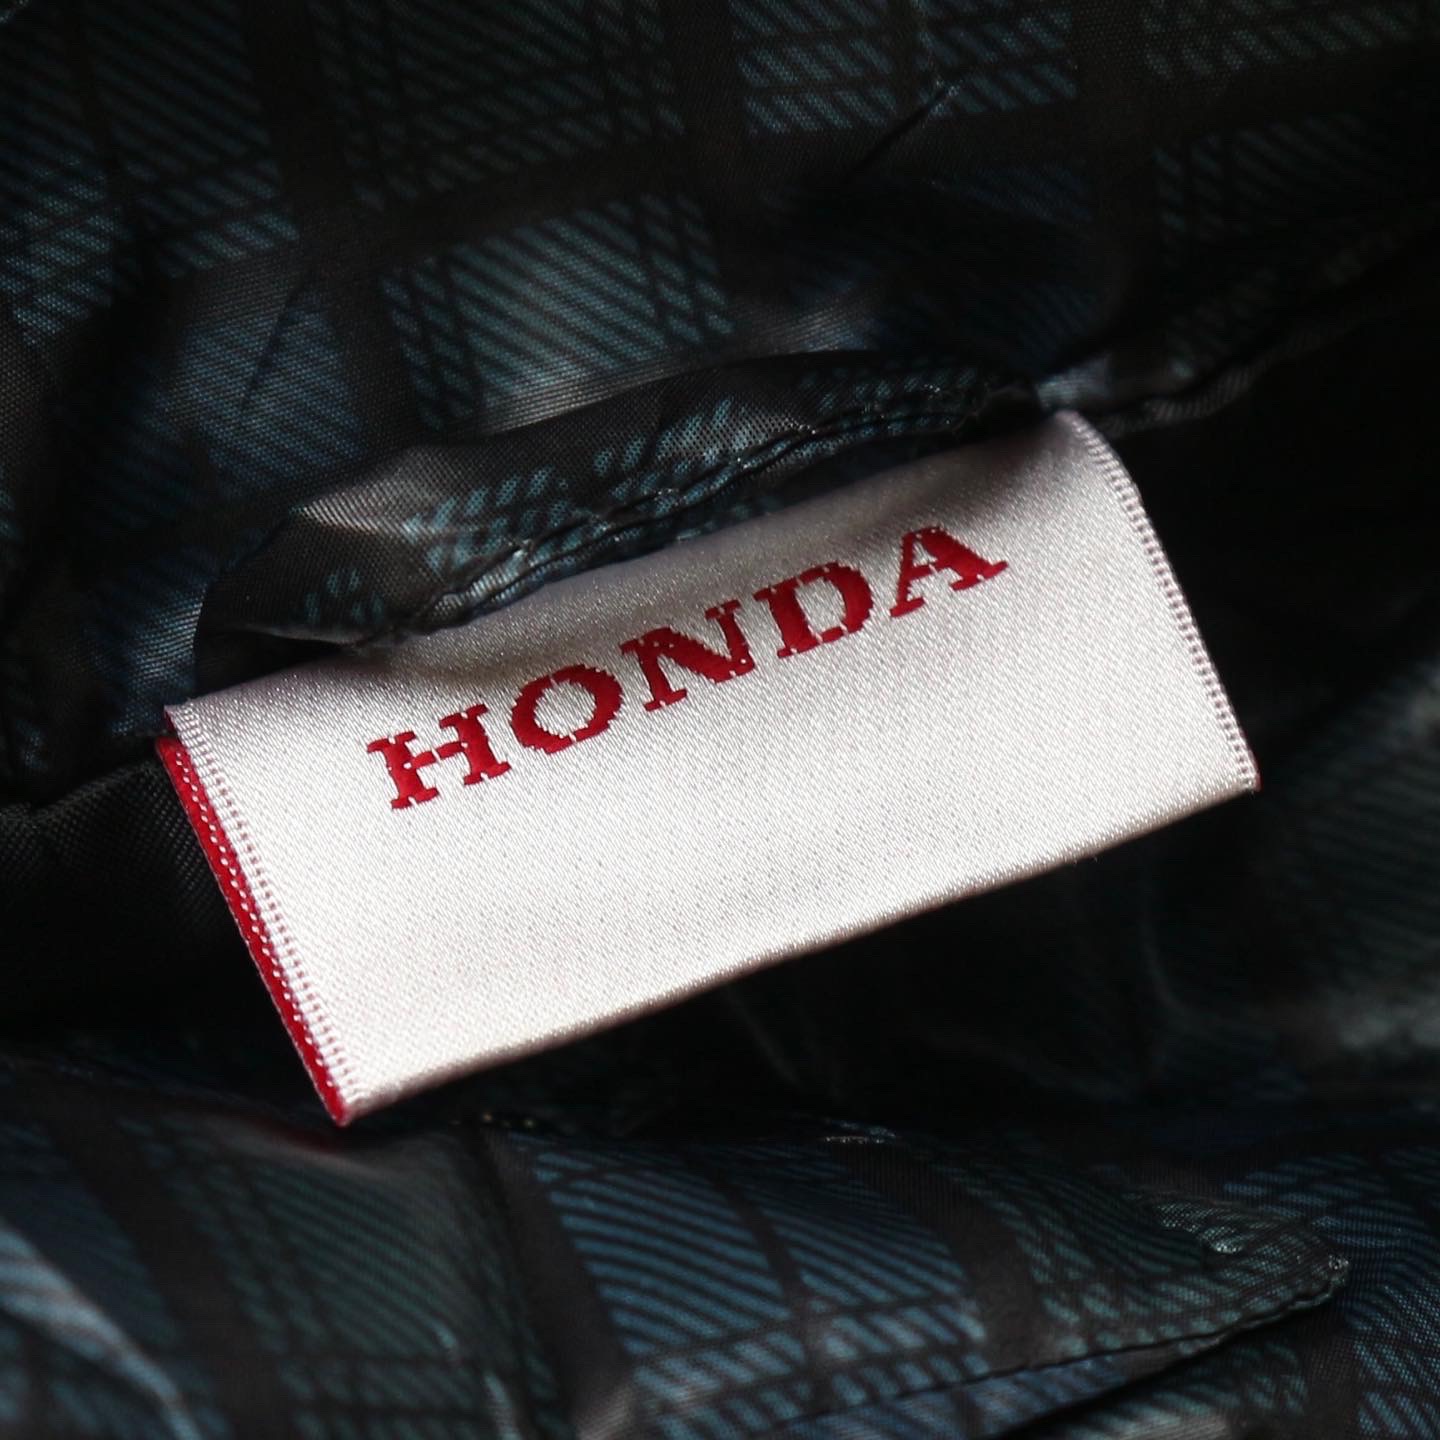 Honda Merch Outdoor Down Vest Size L